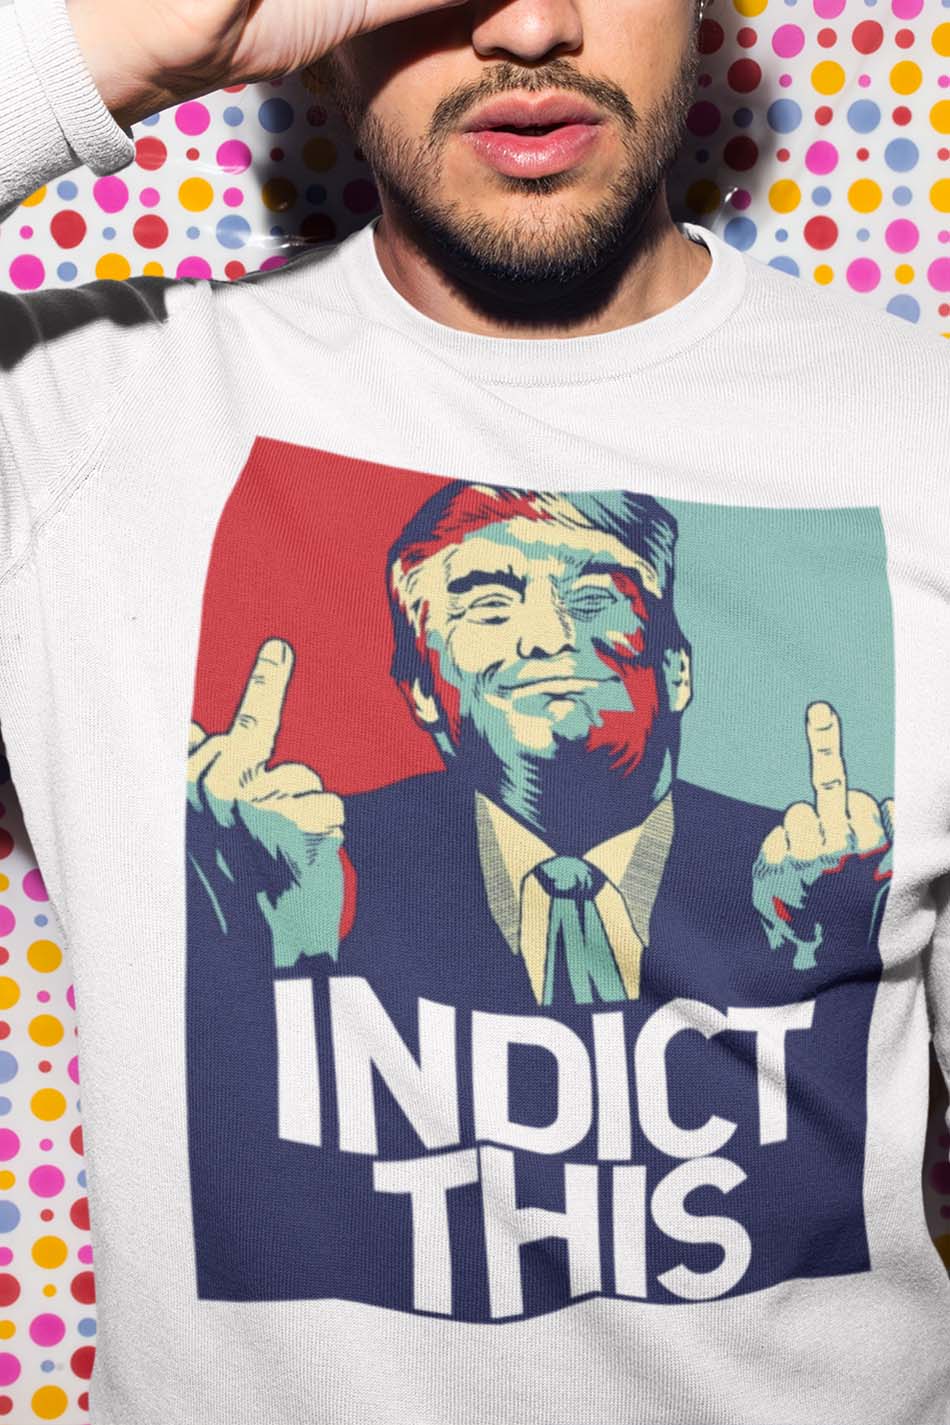 Indict This Donald Trump  Sweatshirt